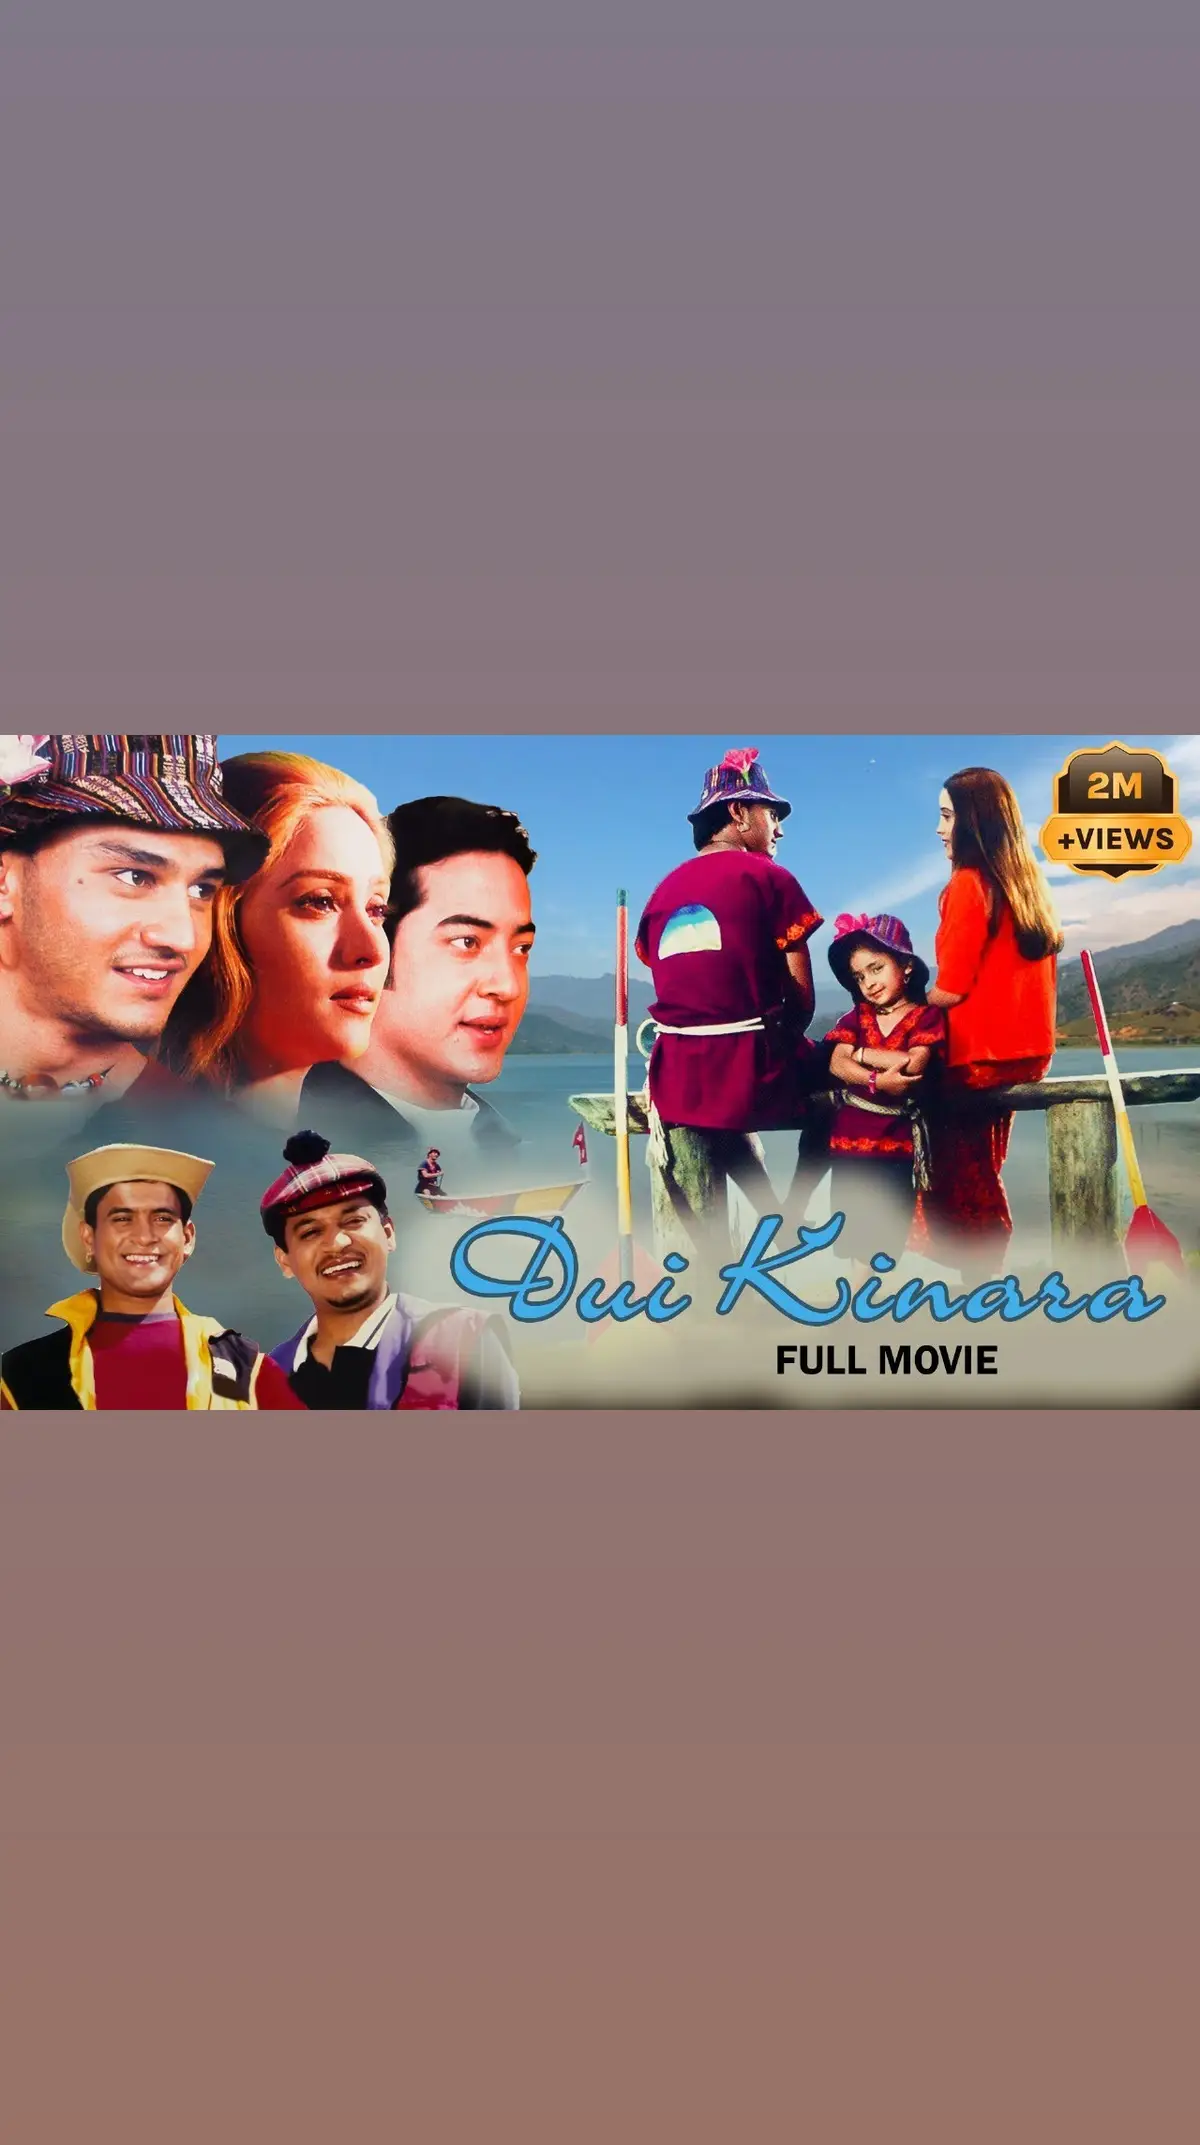 Aankha Bharika Sapana... Vocal: Udit Narayan Jha Movie:-Dui Kinara Lyrics: Tulasi Ghimire Music: Ranjit Gajmer Cast: Niruta Singh, Suman Singh, Jitu Nepal #duikinaara #duikinaramovie #aankhavarikasapana #uditnarayan #nirutasingh #sumansingh #jitunepal #tulsighimire #ranjitgajmer #duikinara #duikinaramoviesong #duikinaramovietone🌸😍😊 #duikinaramovie #duikinara❤️👌🤙 #duikinarajodejhaiphulale #duikinara💔 #duikinaravaiyorajai❤️ #duikinaravauyorajaibanibagamkholi🥰 #sumansing #nirutasingh # #anjupanta#uditnarayan#hearthackers#hearthacker..44#hearthacker2 #new #newsongs2024 #trendingsong #trendingnepalisong #trendingnepalisong2024 #newsong2024 #viralsong2024 #viraltiktok2024 #newsong2025 #gettingviral #kuwait #kuwait🇰🇼 #kuwait_tiktoker #kuwaitmuser🇰🇼 #nepaltokuwait #ZindagiRocks#zindagirocks #zindagirocks🤘🤘🤘 #happynewyear #happynewyear2024#zindagirocks🇳🇵🤟 #zindagirocks🤘 #zindagirocks🤟🤟🤟🤟 #zindagirocks🤘🤘🤘😃 #zindagirocks🇳🇵🚩🎊🎊🎉🎉🌺🌺💞💞  #zindagirocks🤘🤘❤️🥰🥰 #tiktokinthemix #chandragiri_hills#chandragiricablecar#bidurguru#हुन्छ_पूरा_चिताएको_कुरा🙏# #laxmimatapujaa #laxmimata🙏 #laxmimata🙏🌺🌼🌸🌸 #hearthacker#hearthacker44 #happyteej #happydashin #happydashintoall🥰 #happydashin2080 #dasnin2080 #happydashin❤️❤️ #happydashineveryone #happydashintoallnepalifam #happydashinallofyou🙏🙏 #happydashin🌺 #happydashin💐 #happydashininadvance #greatfestival #greatfestivalofnepali #greatfestivalofnepalipeople #greatfestivalofnepaliwomen #greatfestival❣️💞 #greatfestivalofhindu #badhadashin #nauratha #durga #durgama #madurga #naurathadevi #hetauda #kc #upendrakc #hetaudamuser#hearthacker #hetaudamuser🇳🇵  #sujanchapagain #sujan_chapagain #alexbishwakarma #bibhuta #paras #katakkimankhani #katakki_mann_khani #nepalipopsong #neppop #rock #sanchitaluitel ##thank_you_momdad😍 #lossingsupport💔🙂 #lossingyou #nepal #friend #foryourpage #zameen#oldisgold #trending #fyp #fypage #goviral#happy #2023 #songs #song#tseries #happy #fyp #fypシ #fypシ゚viral #fyppppppppppppppppppppppp #f #fyp #fy #fypシ #fypage #fypシ゚viral #fypdongggggggg#fyppppppppppppppppppppppp #goviral #go #trending #trnding #nepalitiktok #tiktok #tiktokindia #titokusa #old #movies #film #songs #videoviral #video #bestsongever#bidyabalan #vidyabalan#Love         ..@महारानी 👑🥀🦋 @フ°ラシ